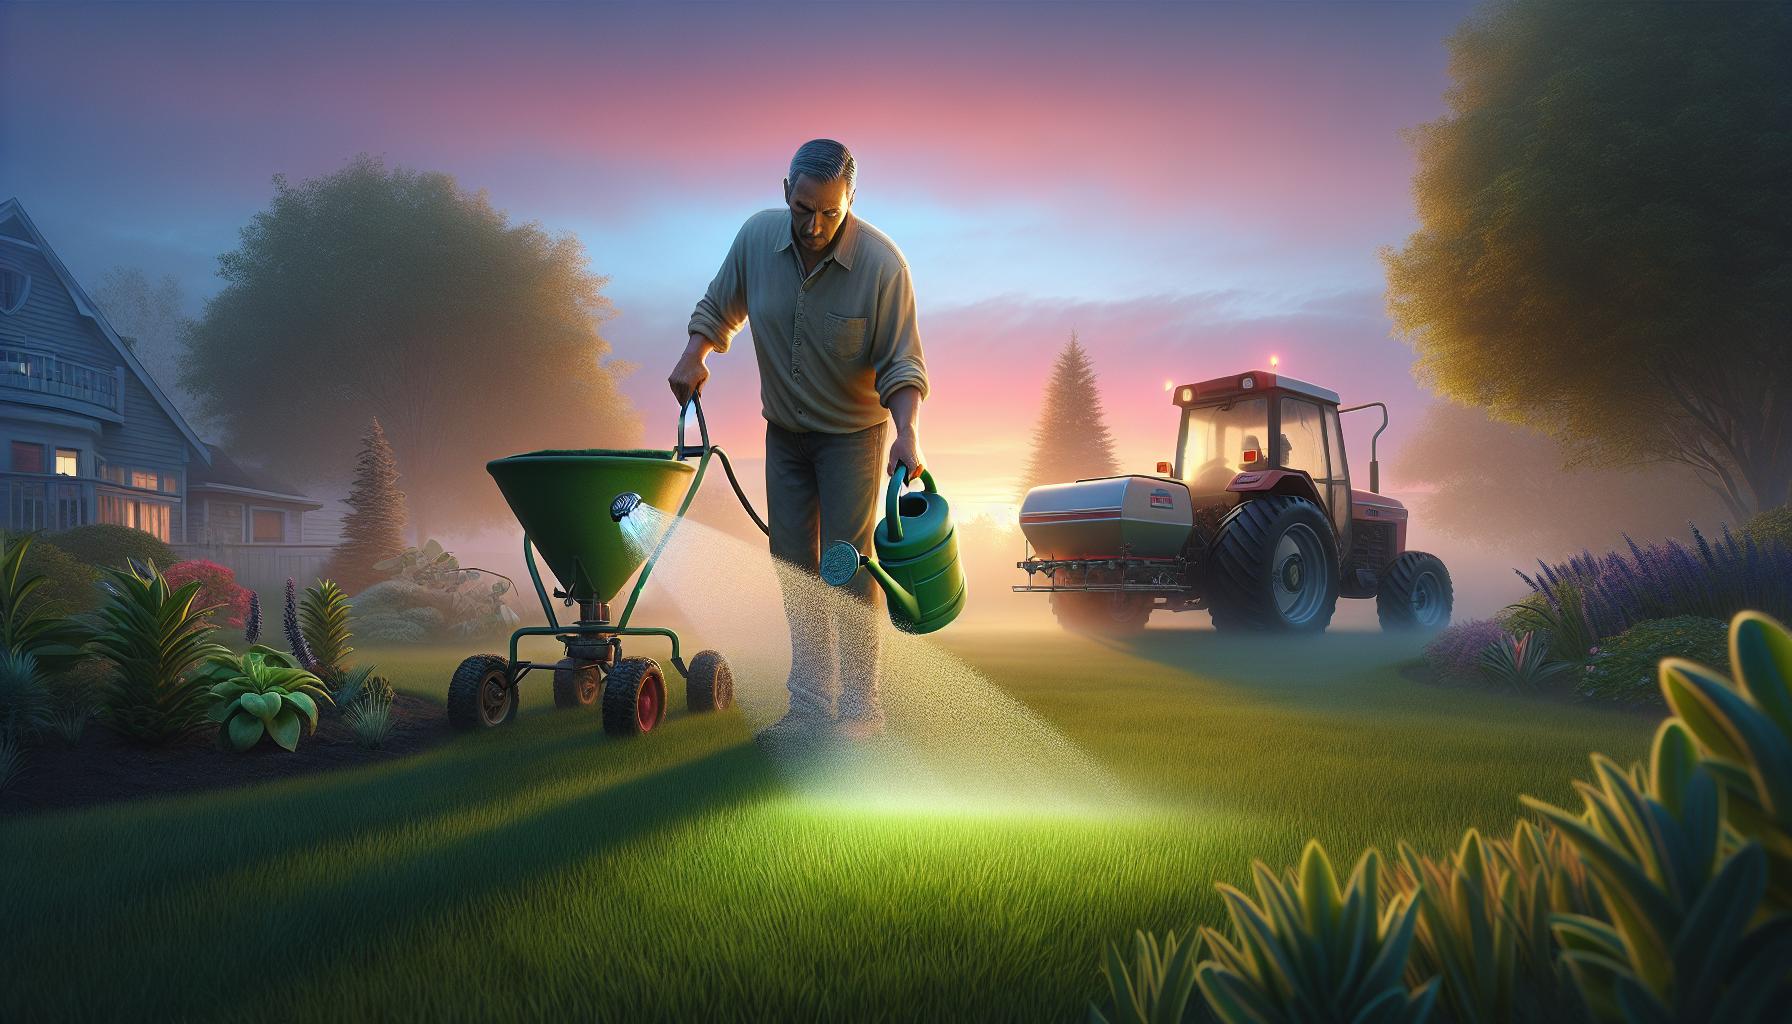 Sunset Farming Illustration